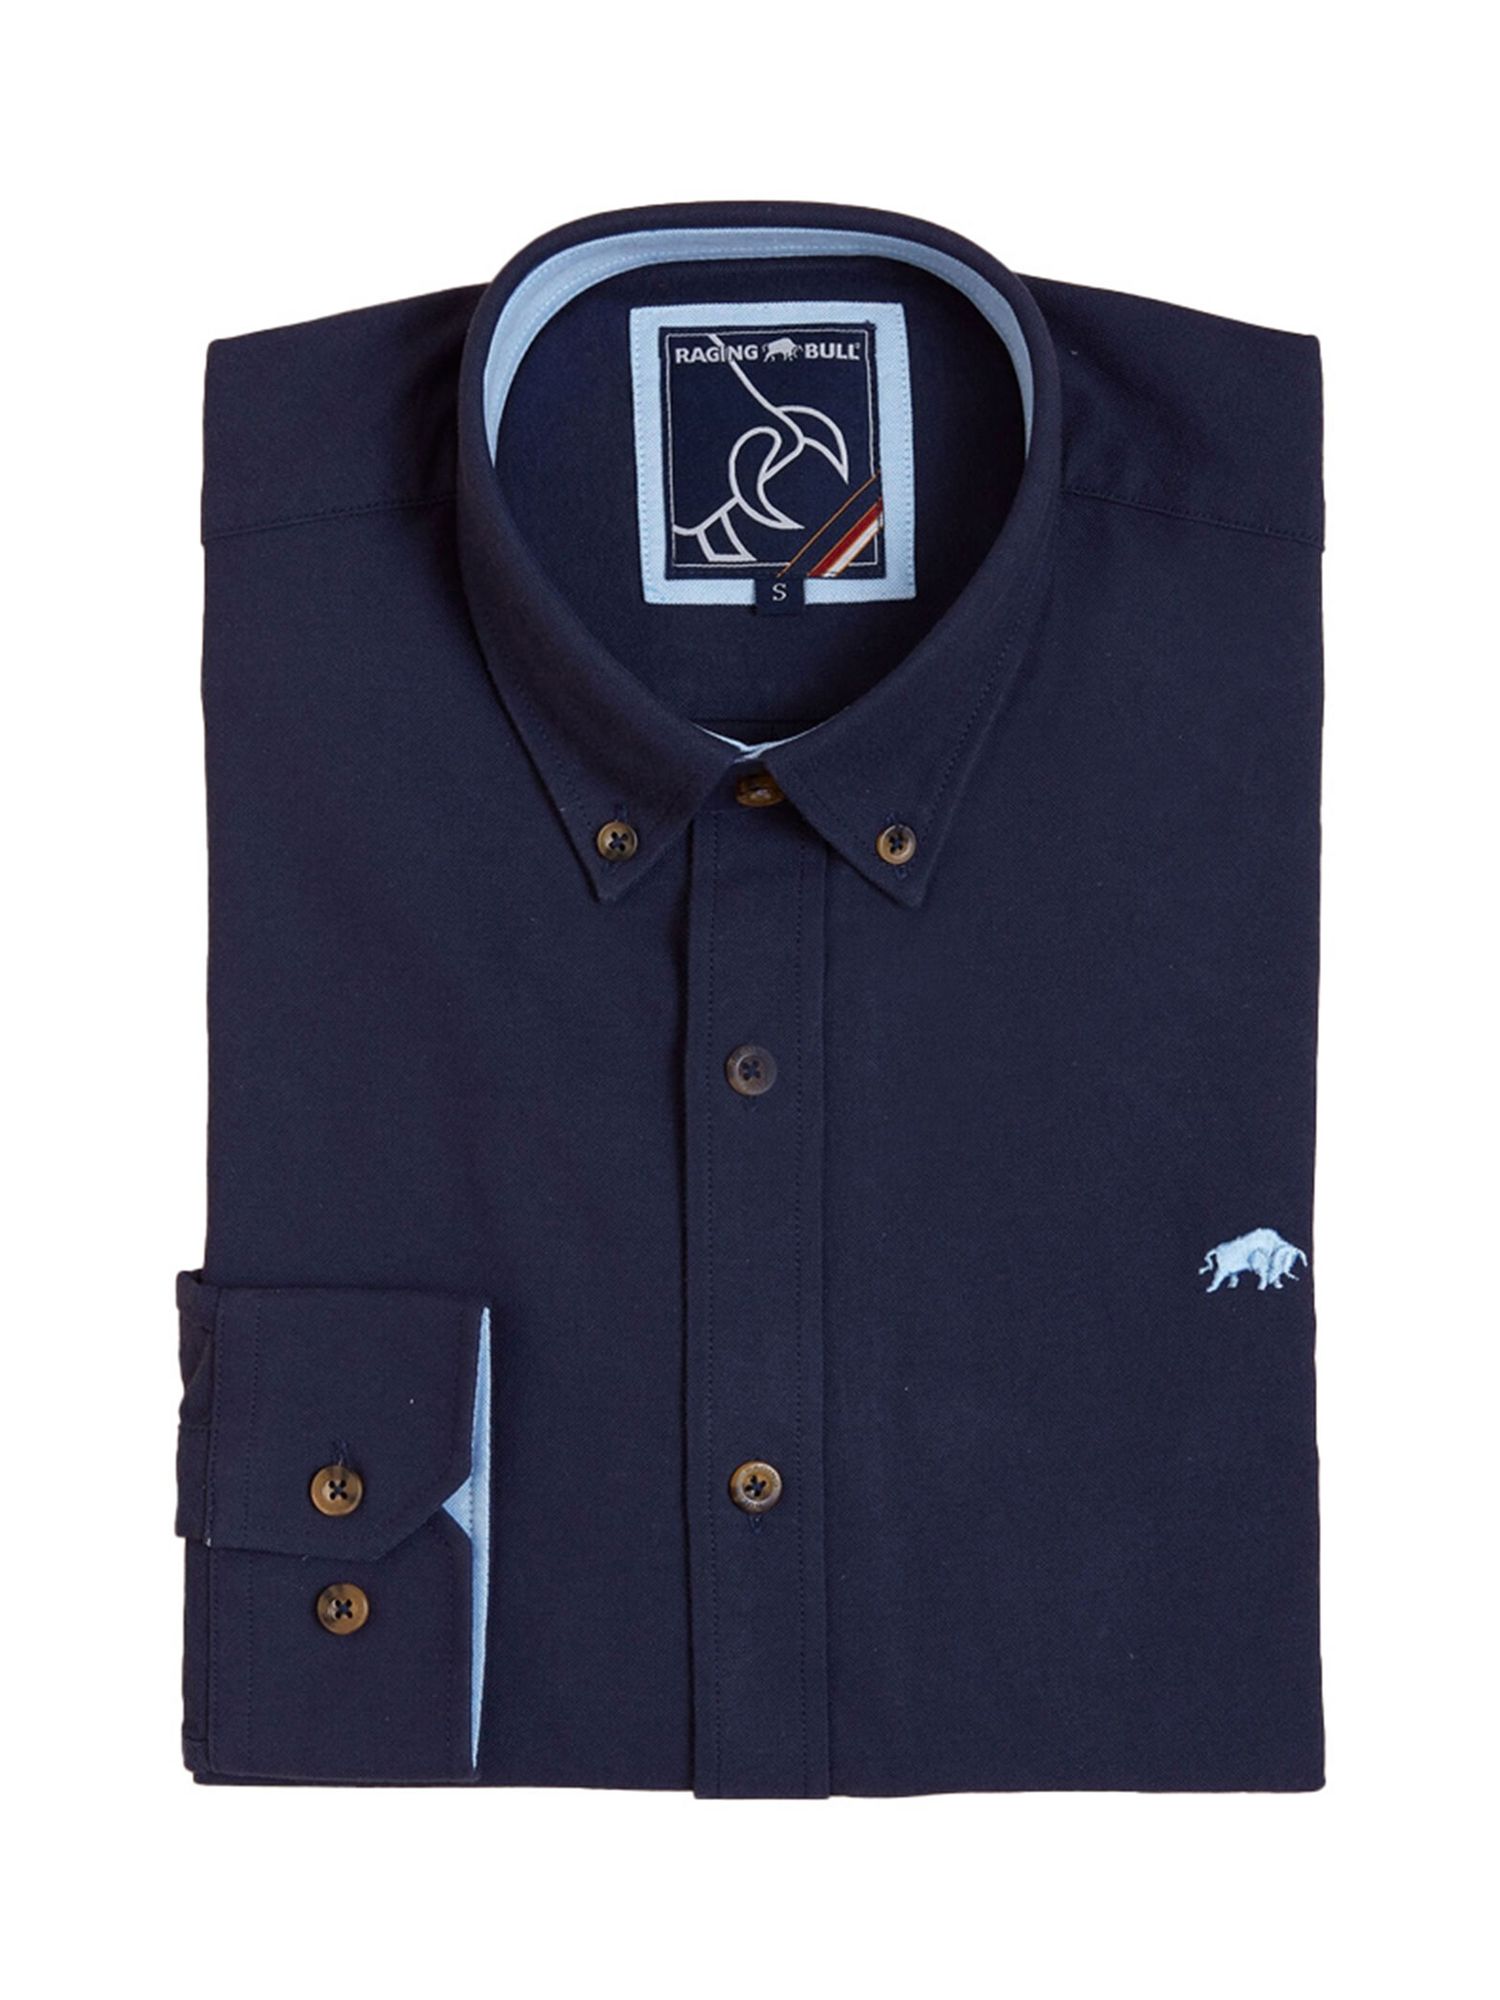 Raging Bull Classic Oxford Shirt, Navy, L